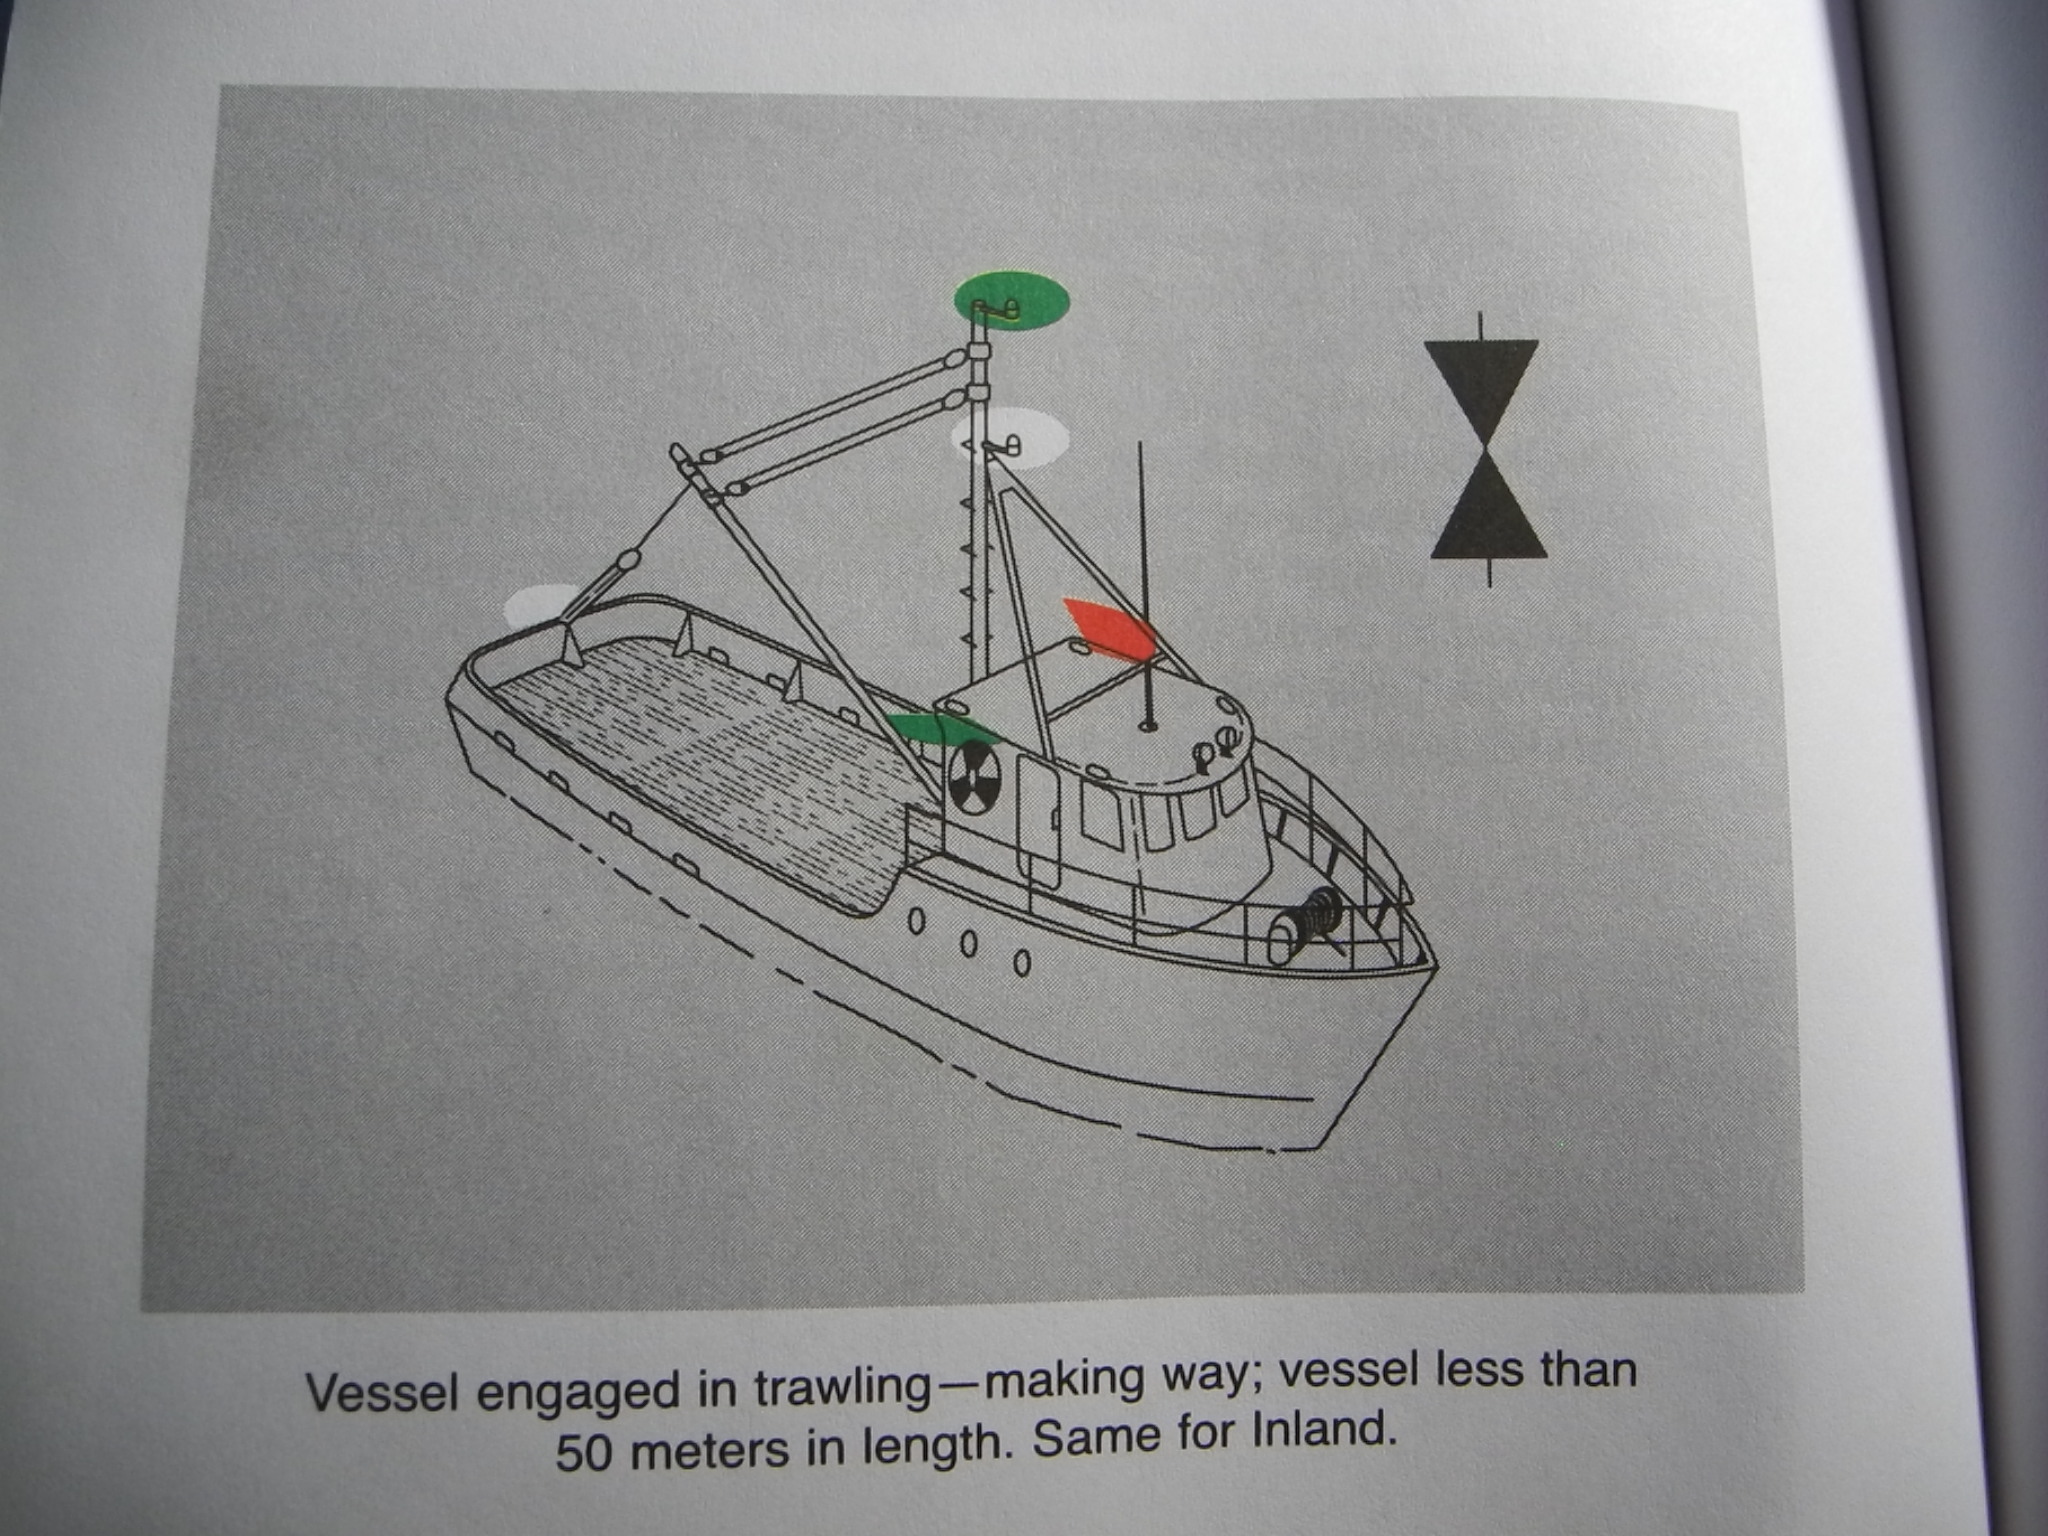 Navigation and boat status